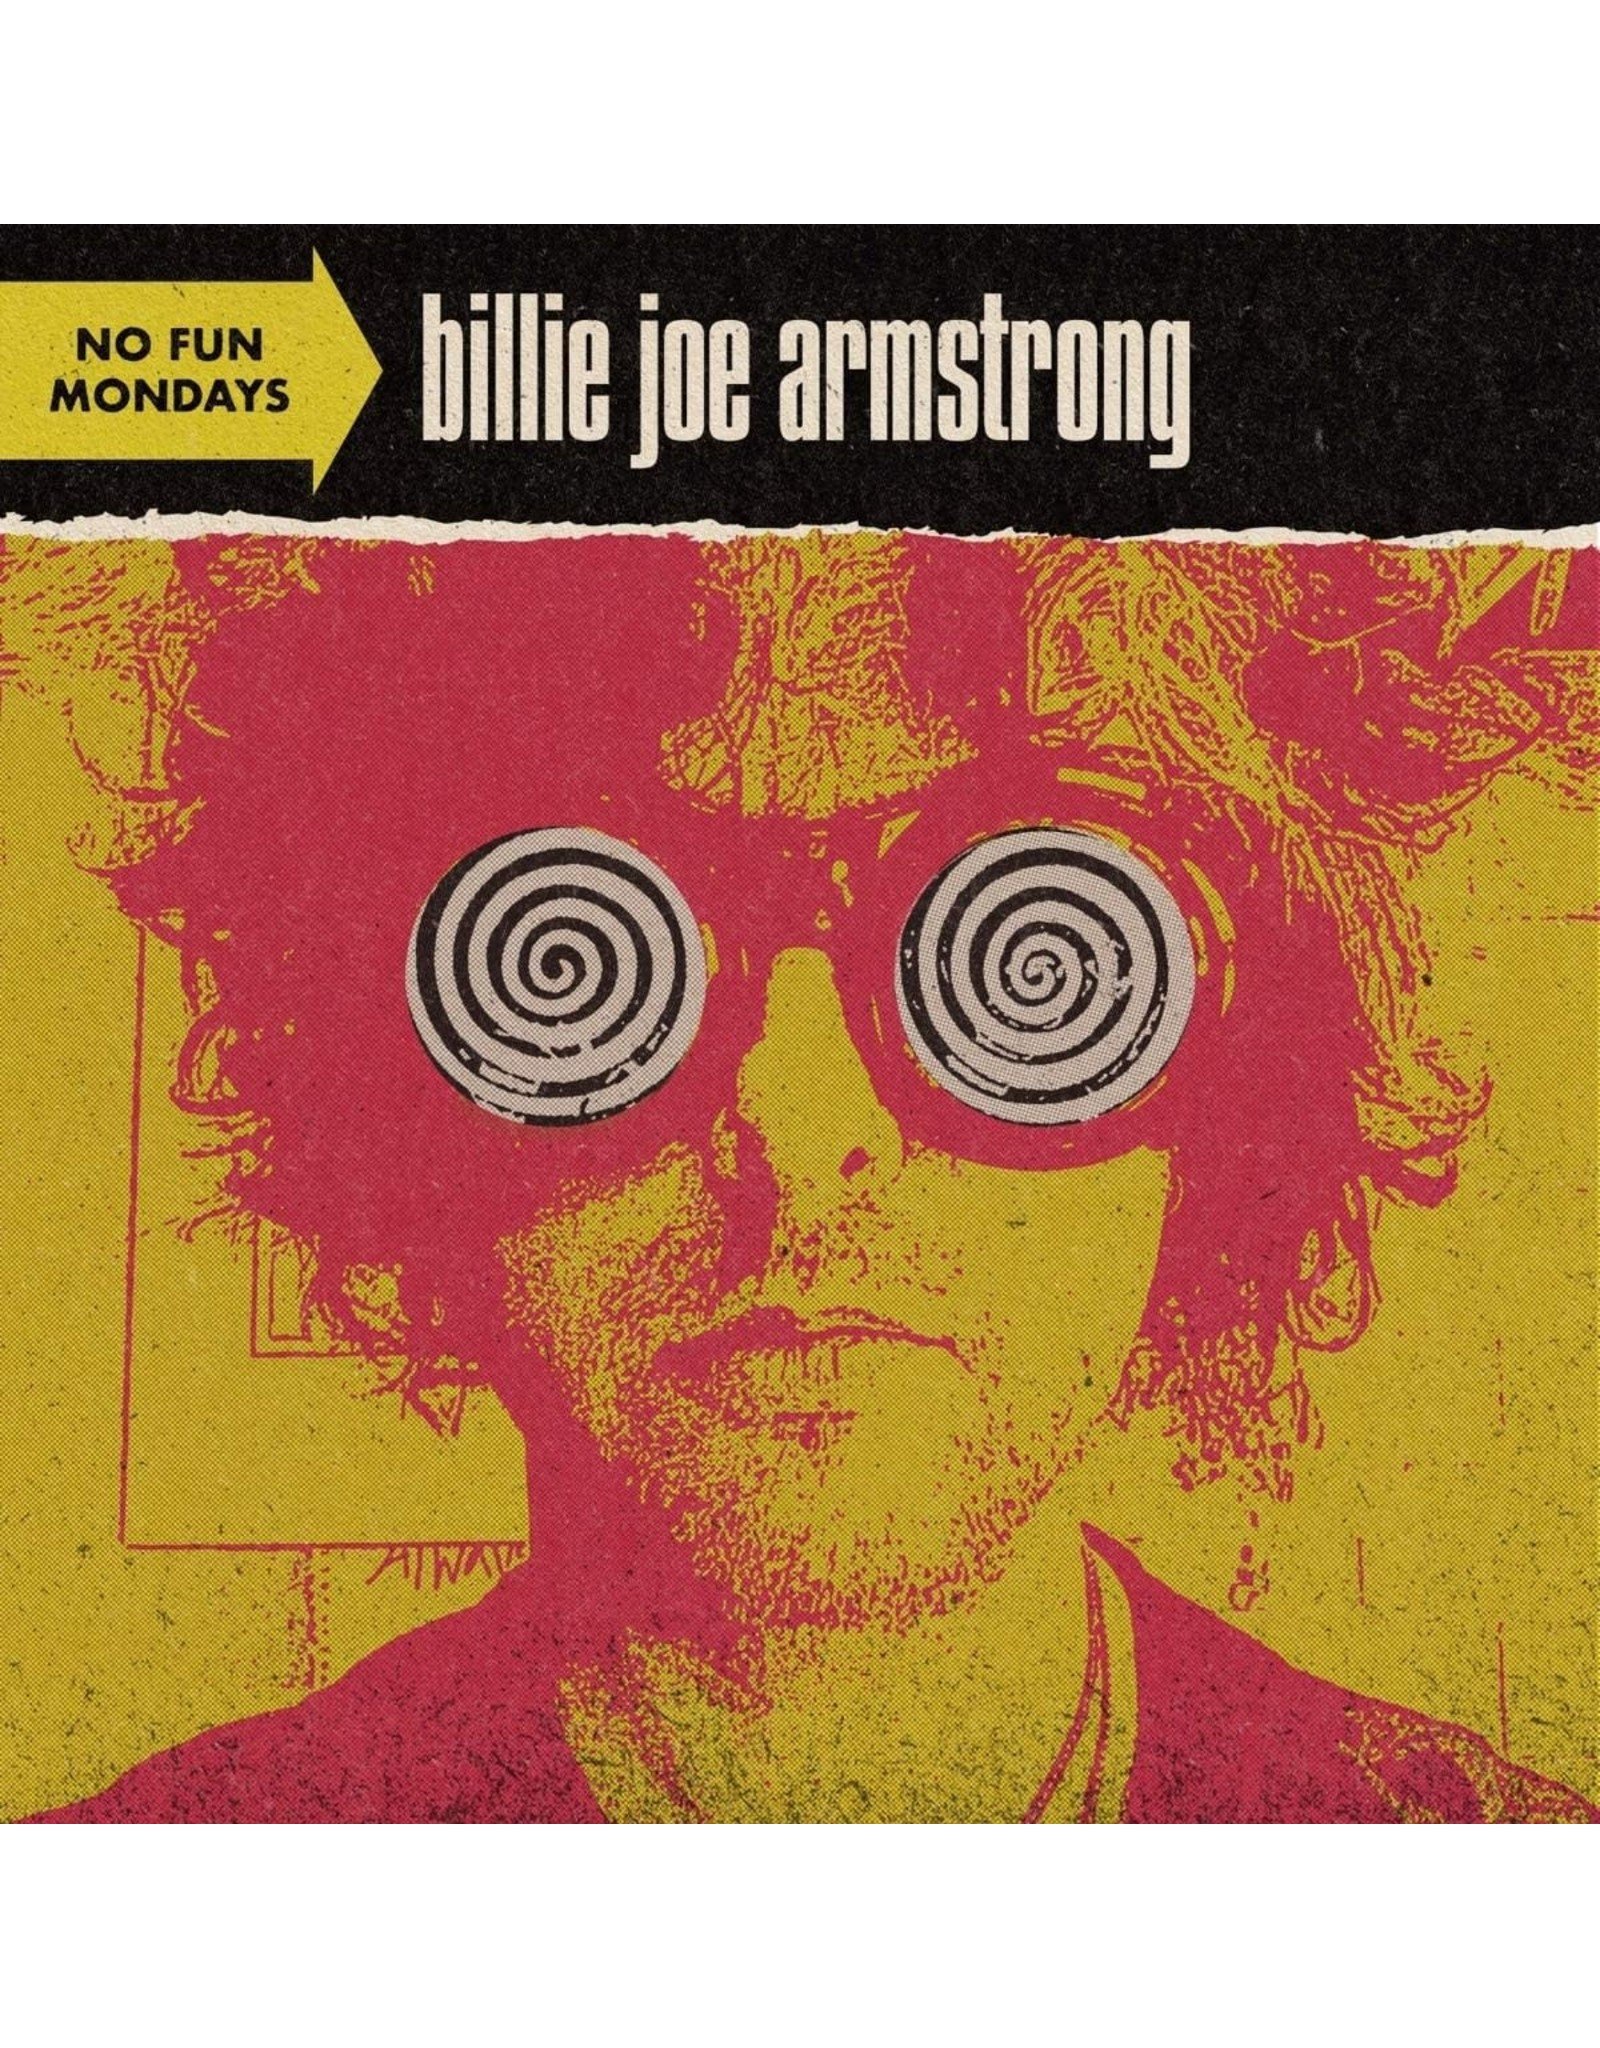 Billie Joe Armstrong - No Fun Mondays (Exclusive Baby Blue Vinyl)